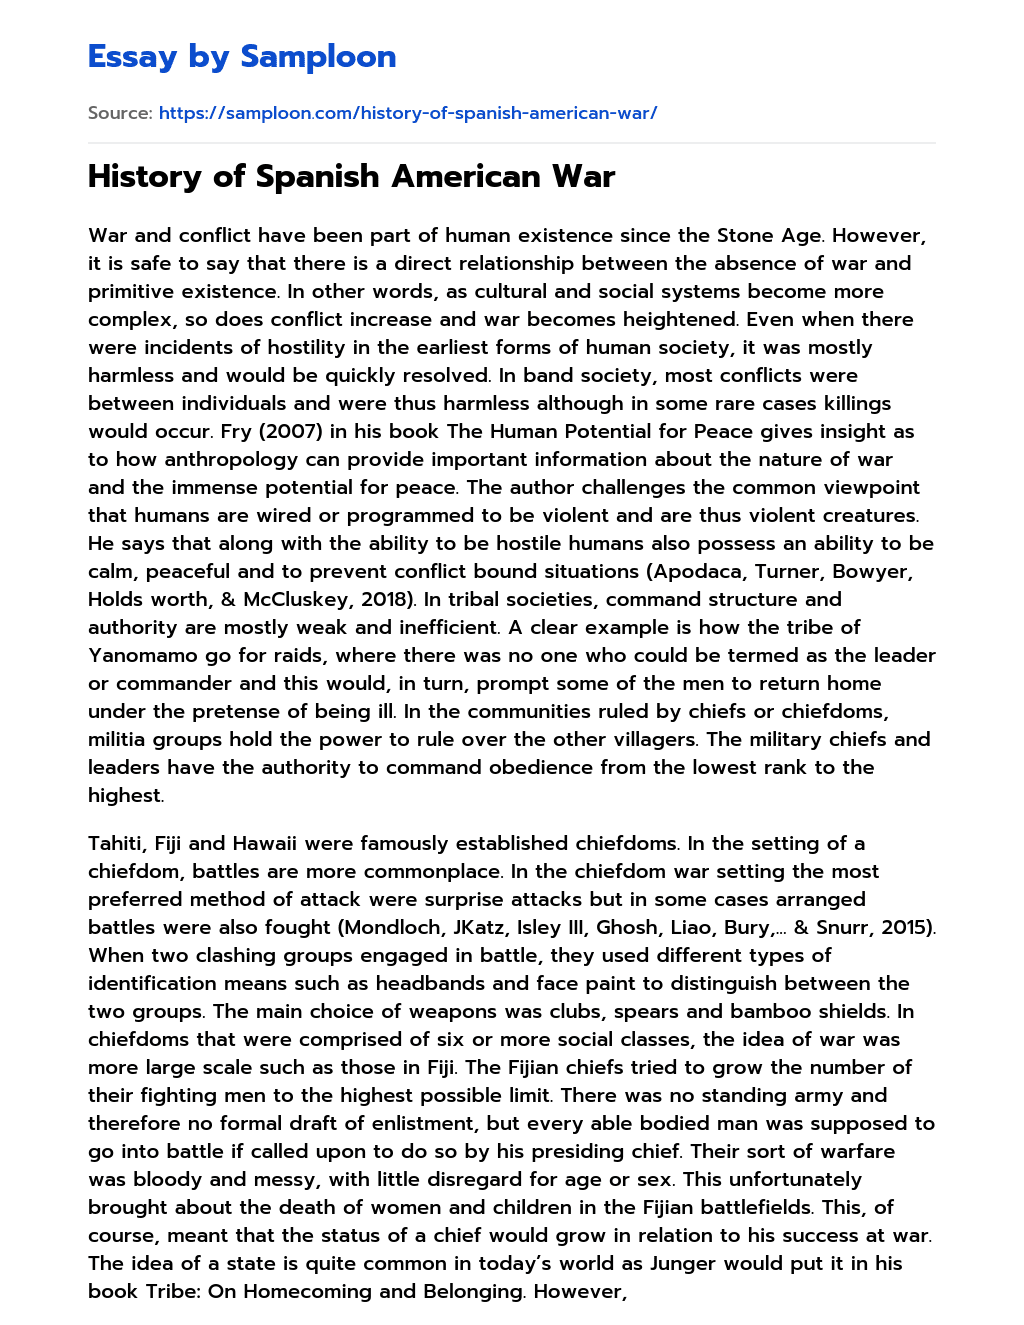 History of Spanish American War essay